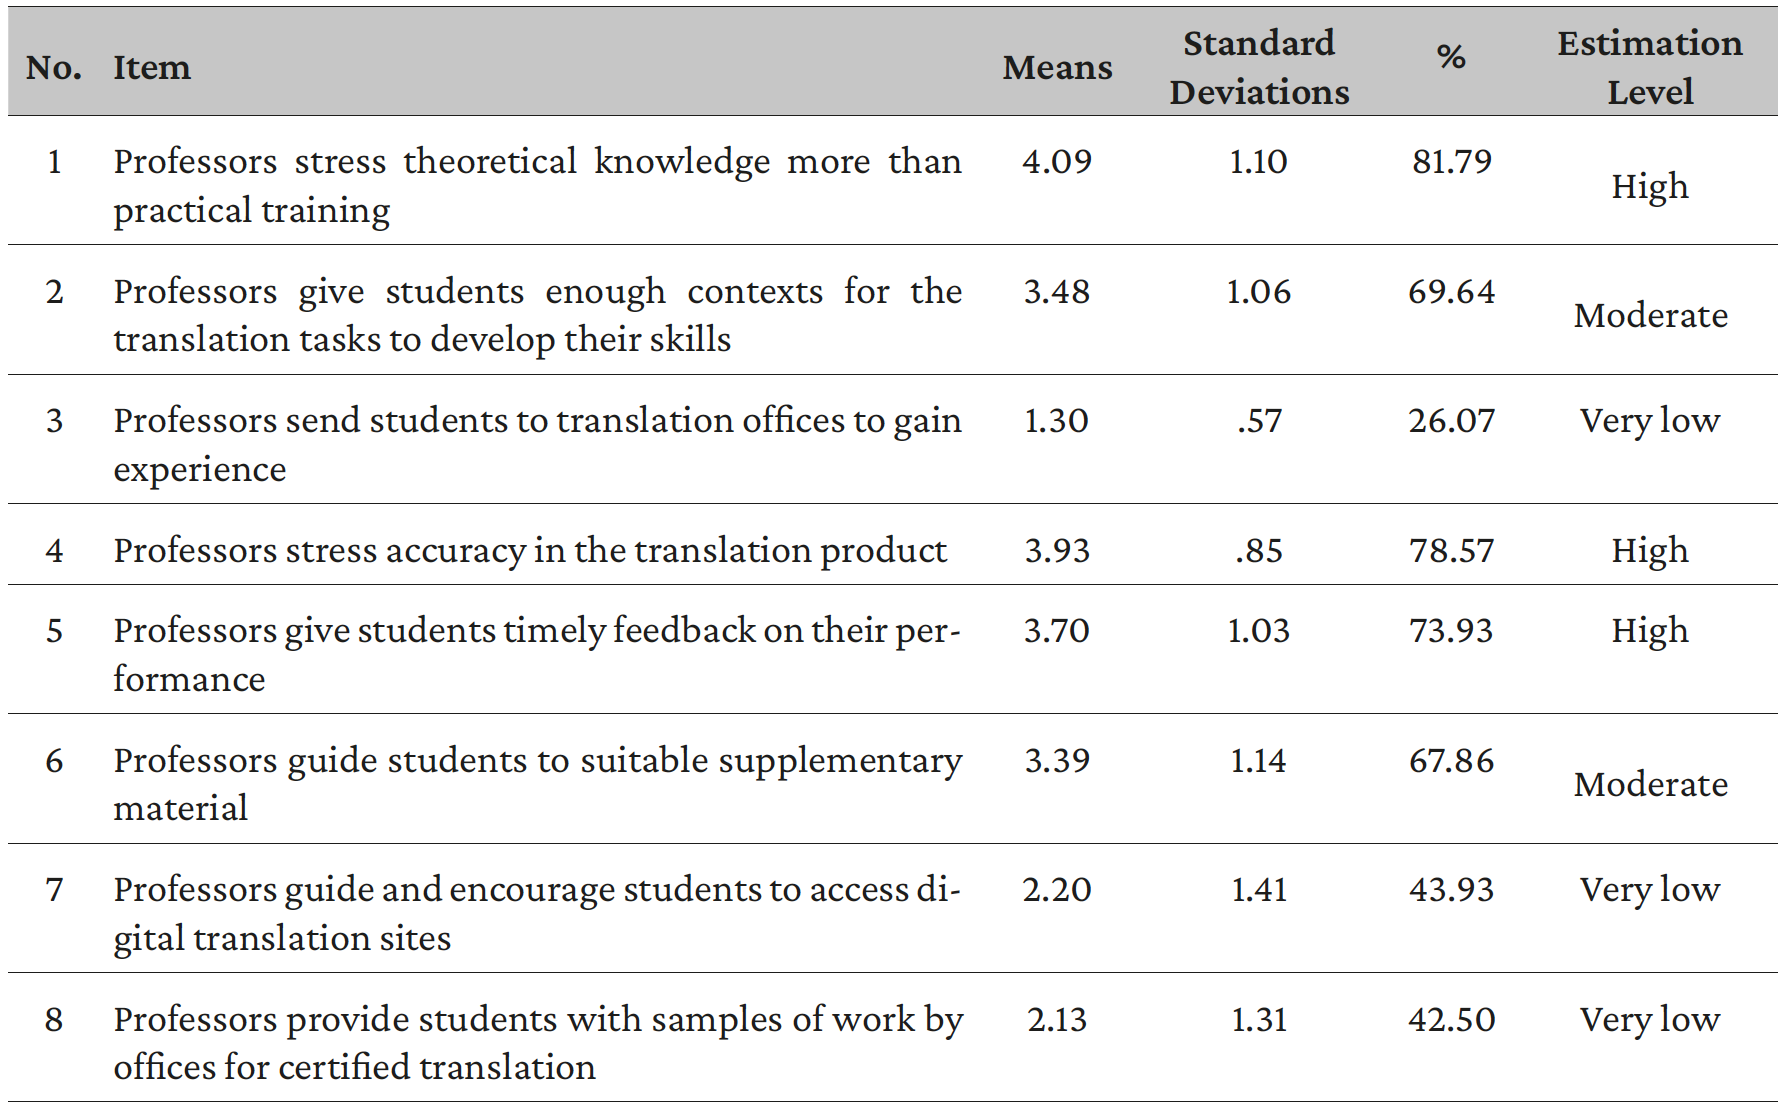 Table 7. Stdents’ perspectives regarding training methodologies